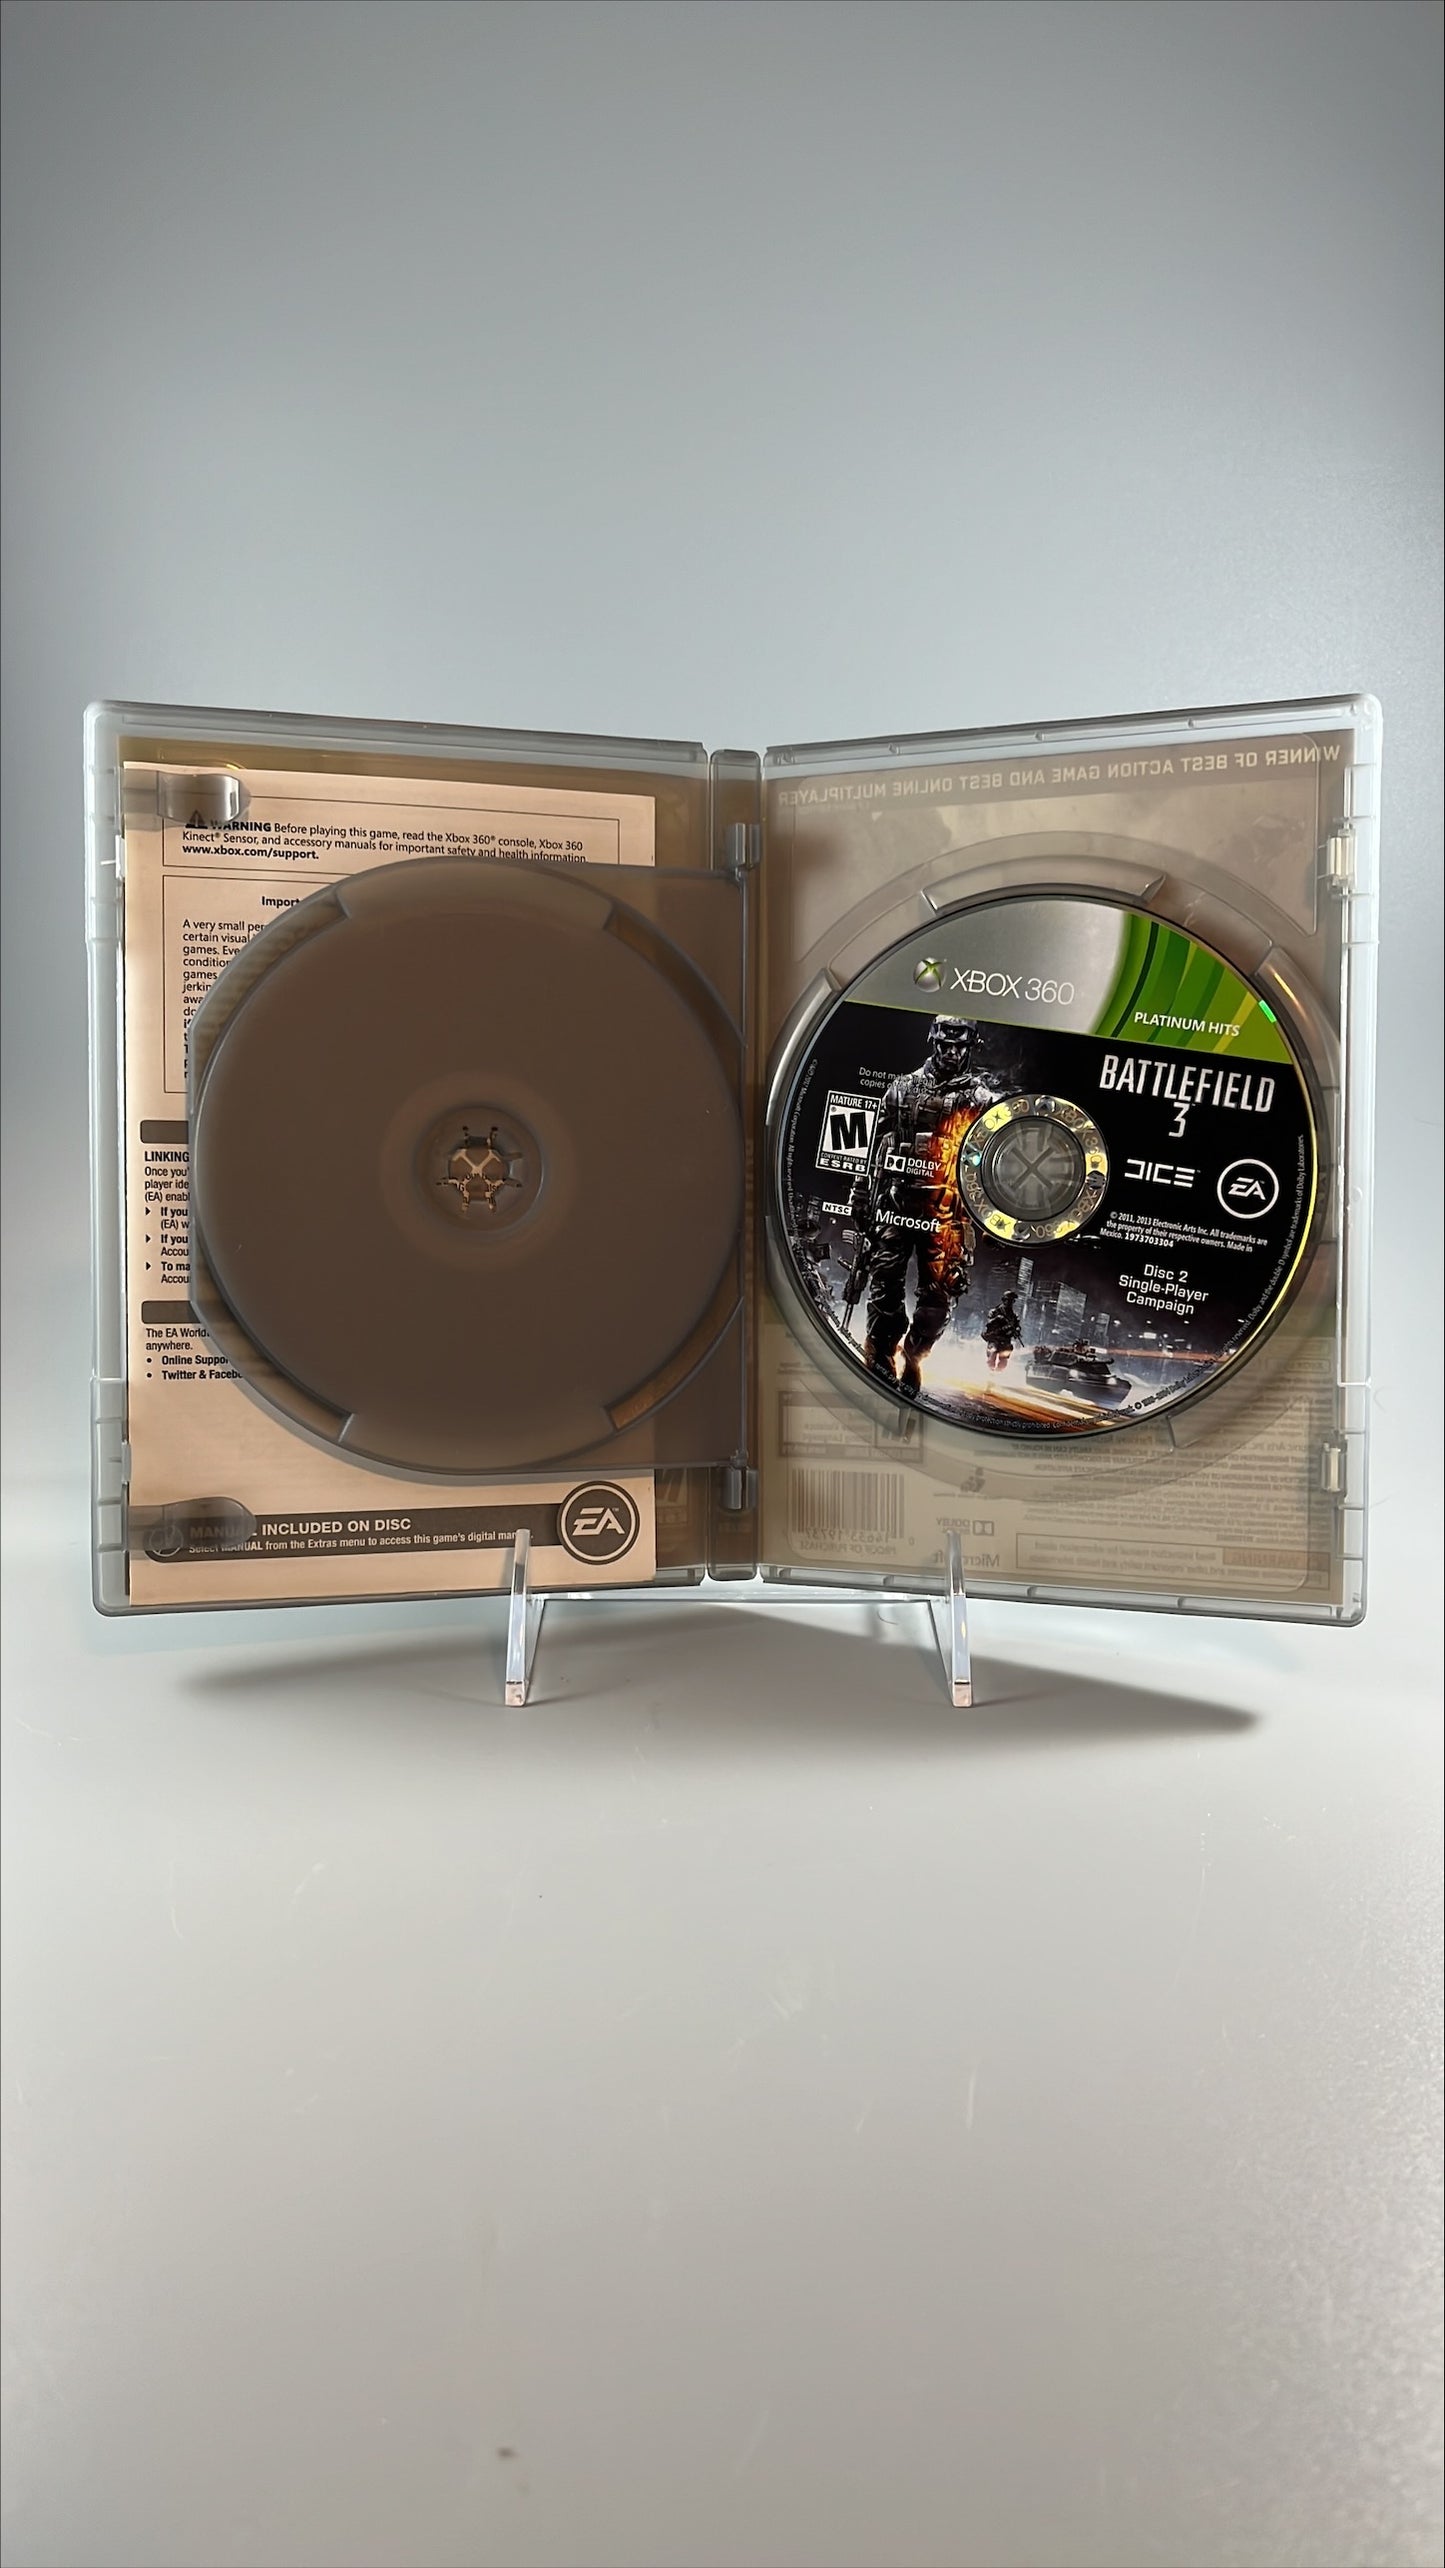 Battlefield 3 - Platinum Hits Version